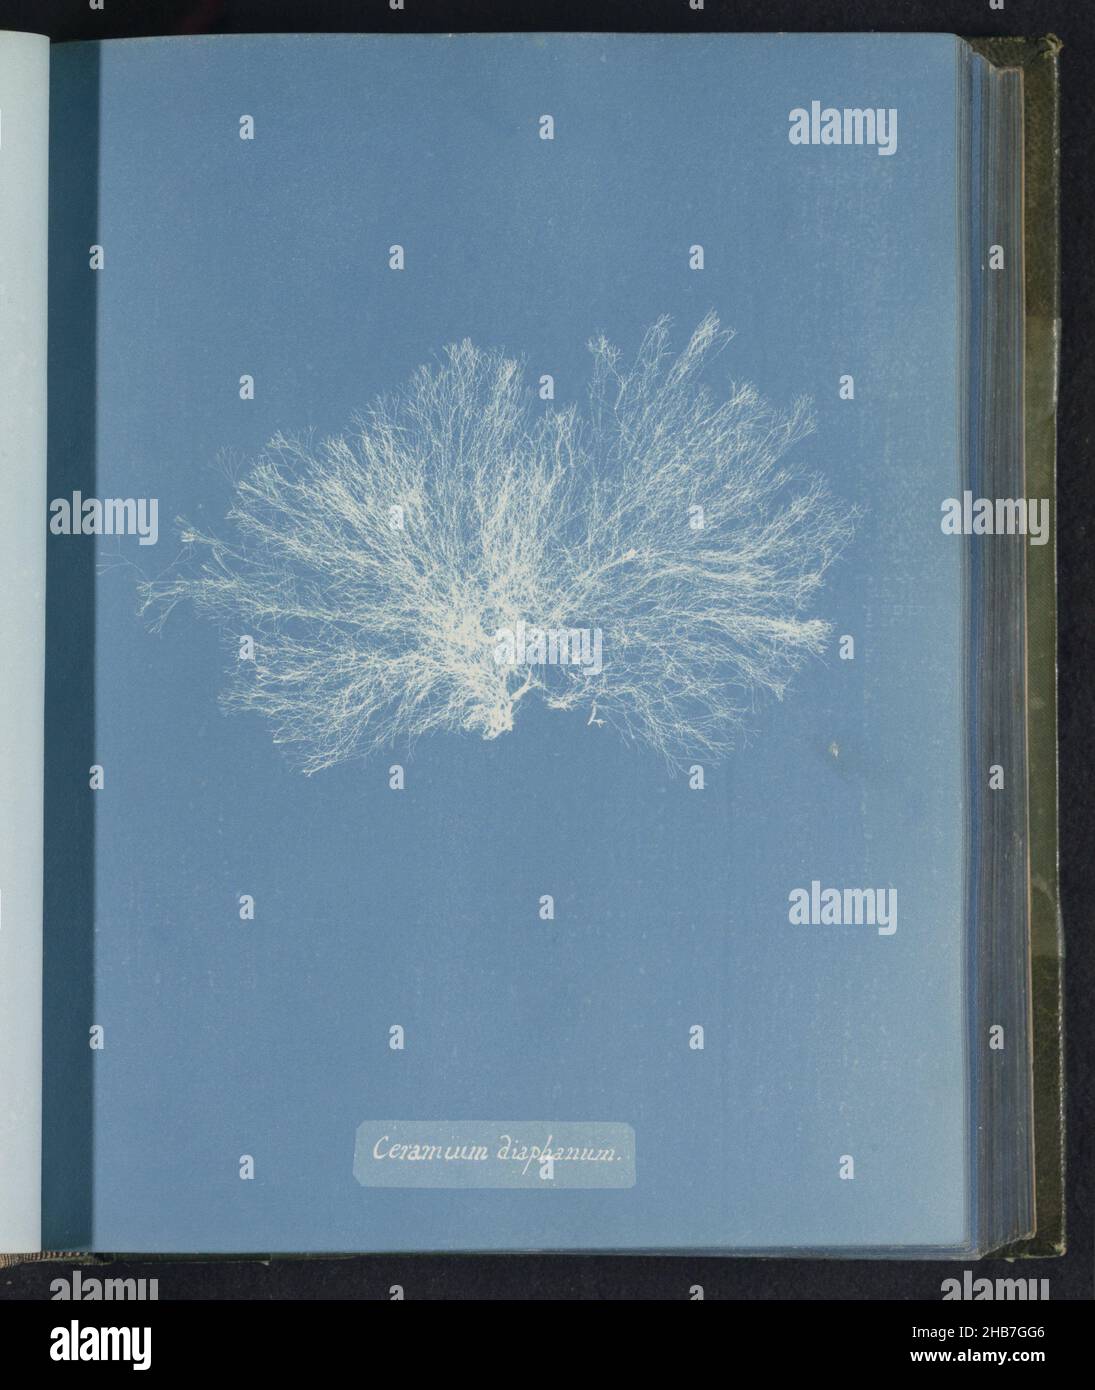 Ceramium diaphanum, Anna Atkins, United Kingdom, c. 1843 - c. 1853, photographic support, cyanotype, height 250 mm × width 200 mm Stock Photo